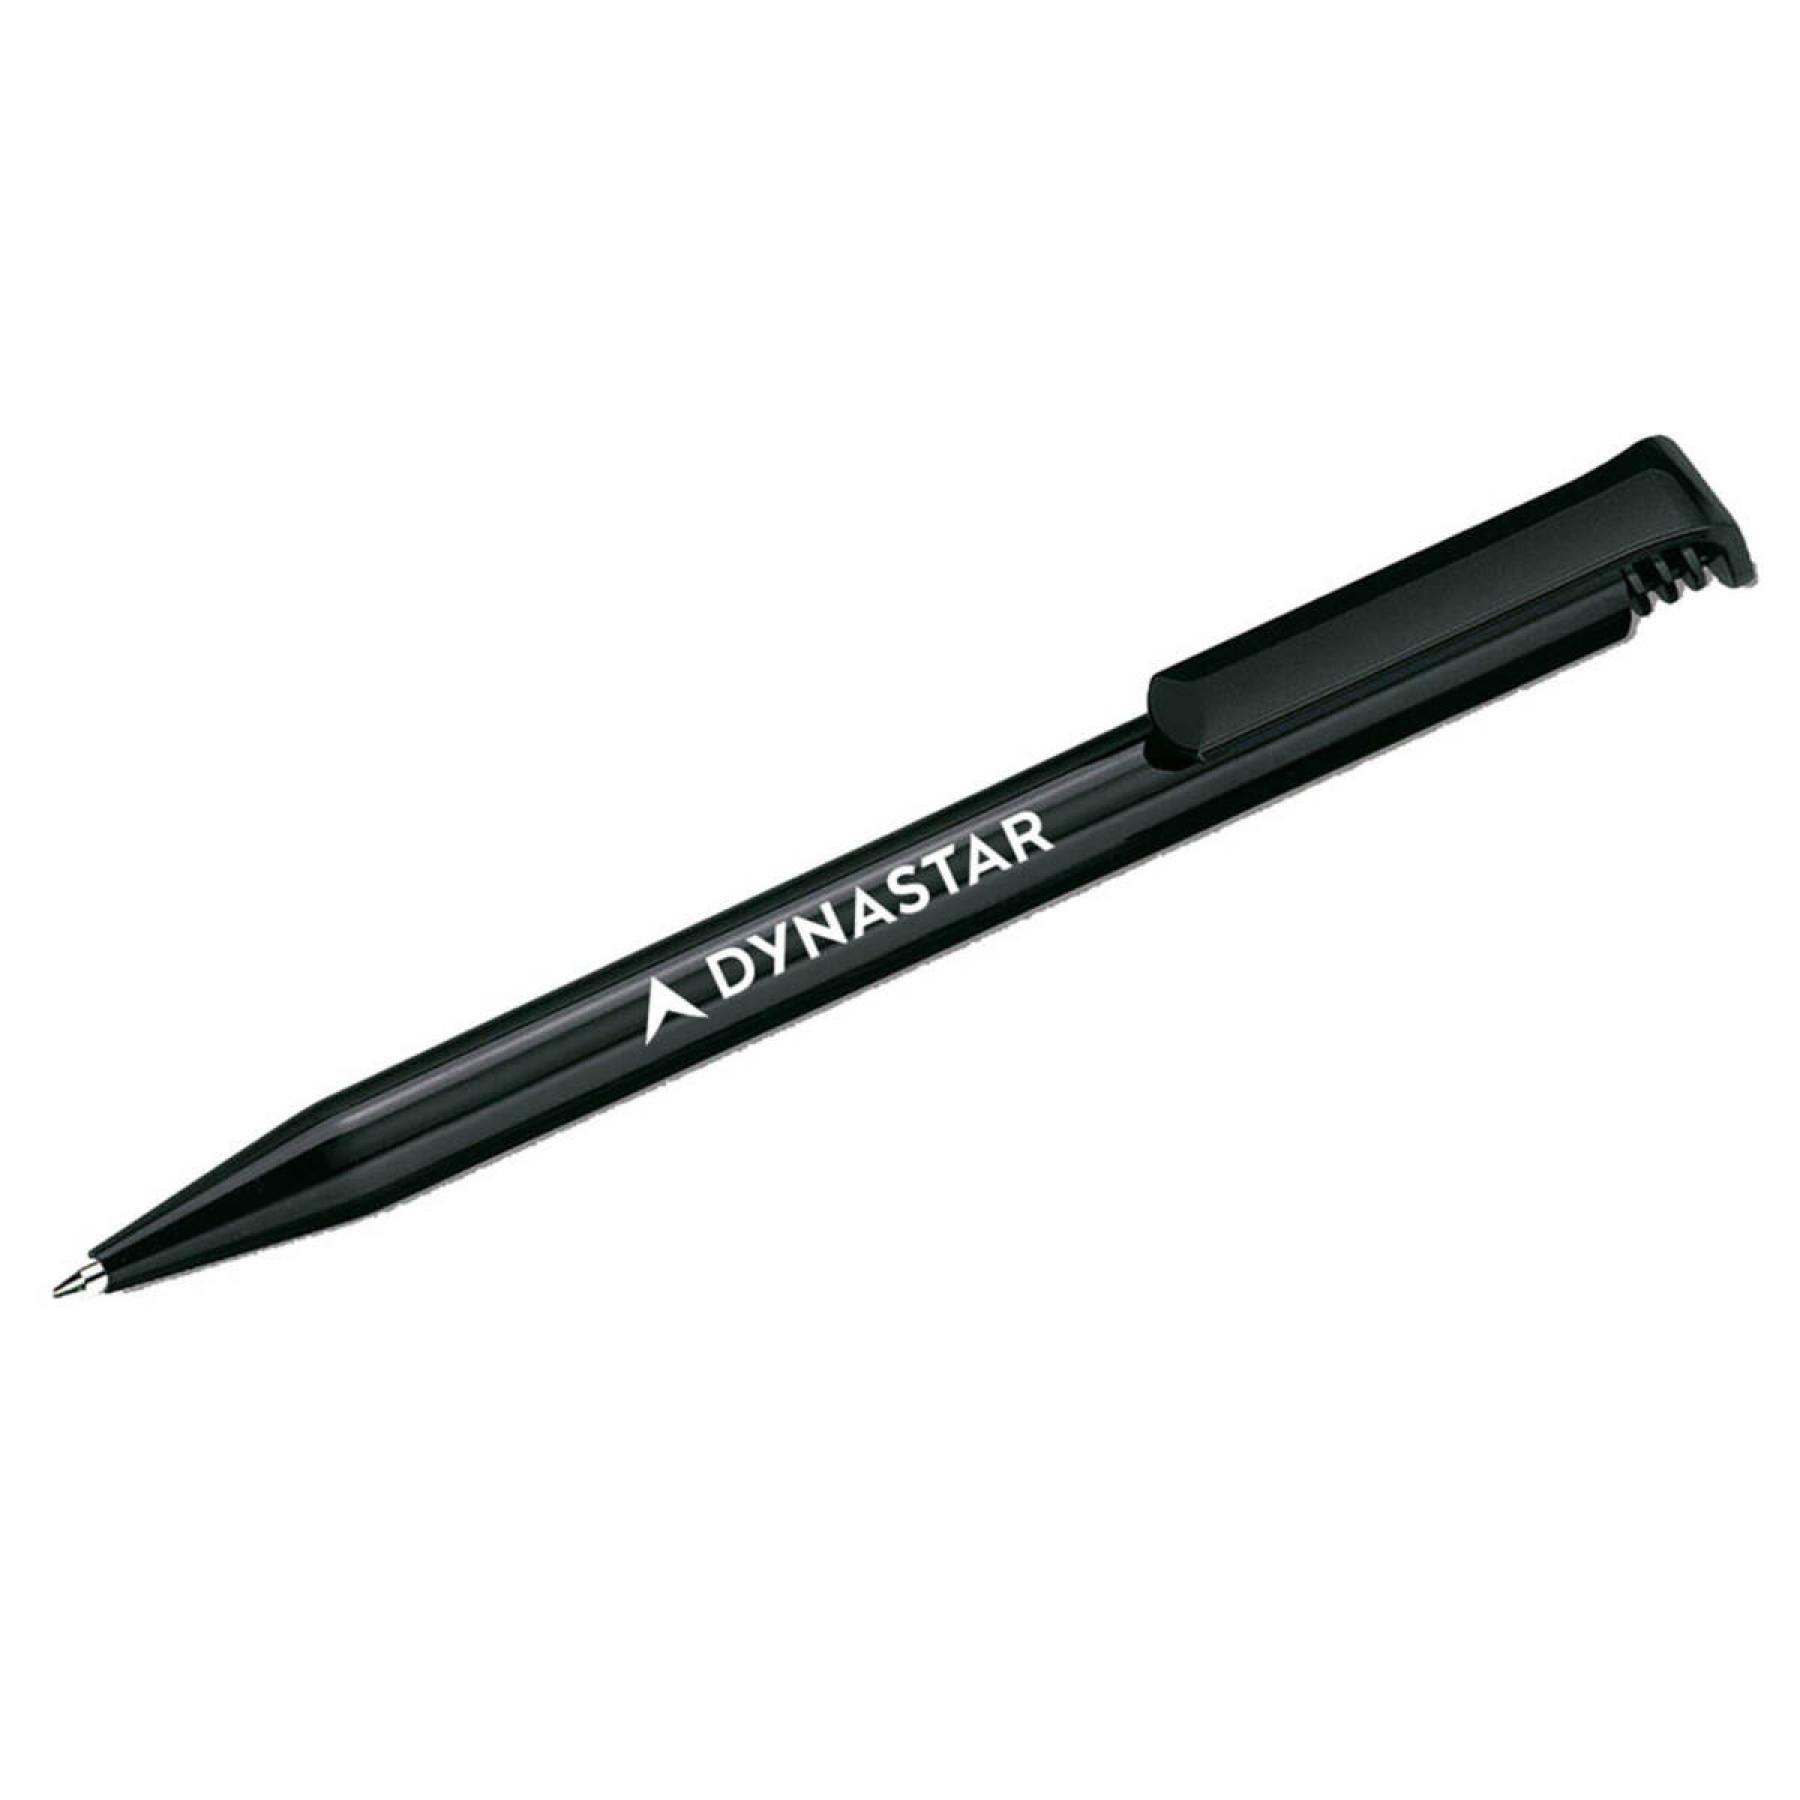 Penna Dynastar L10